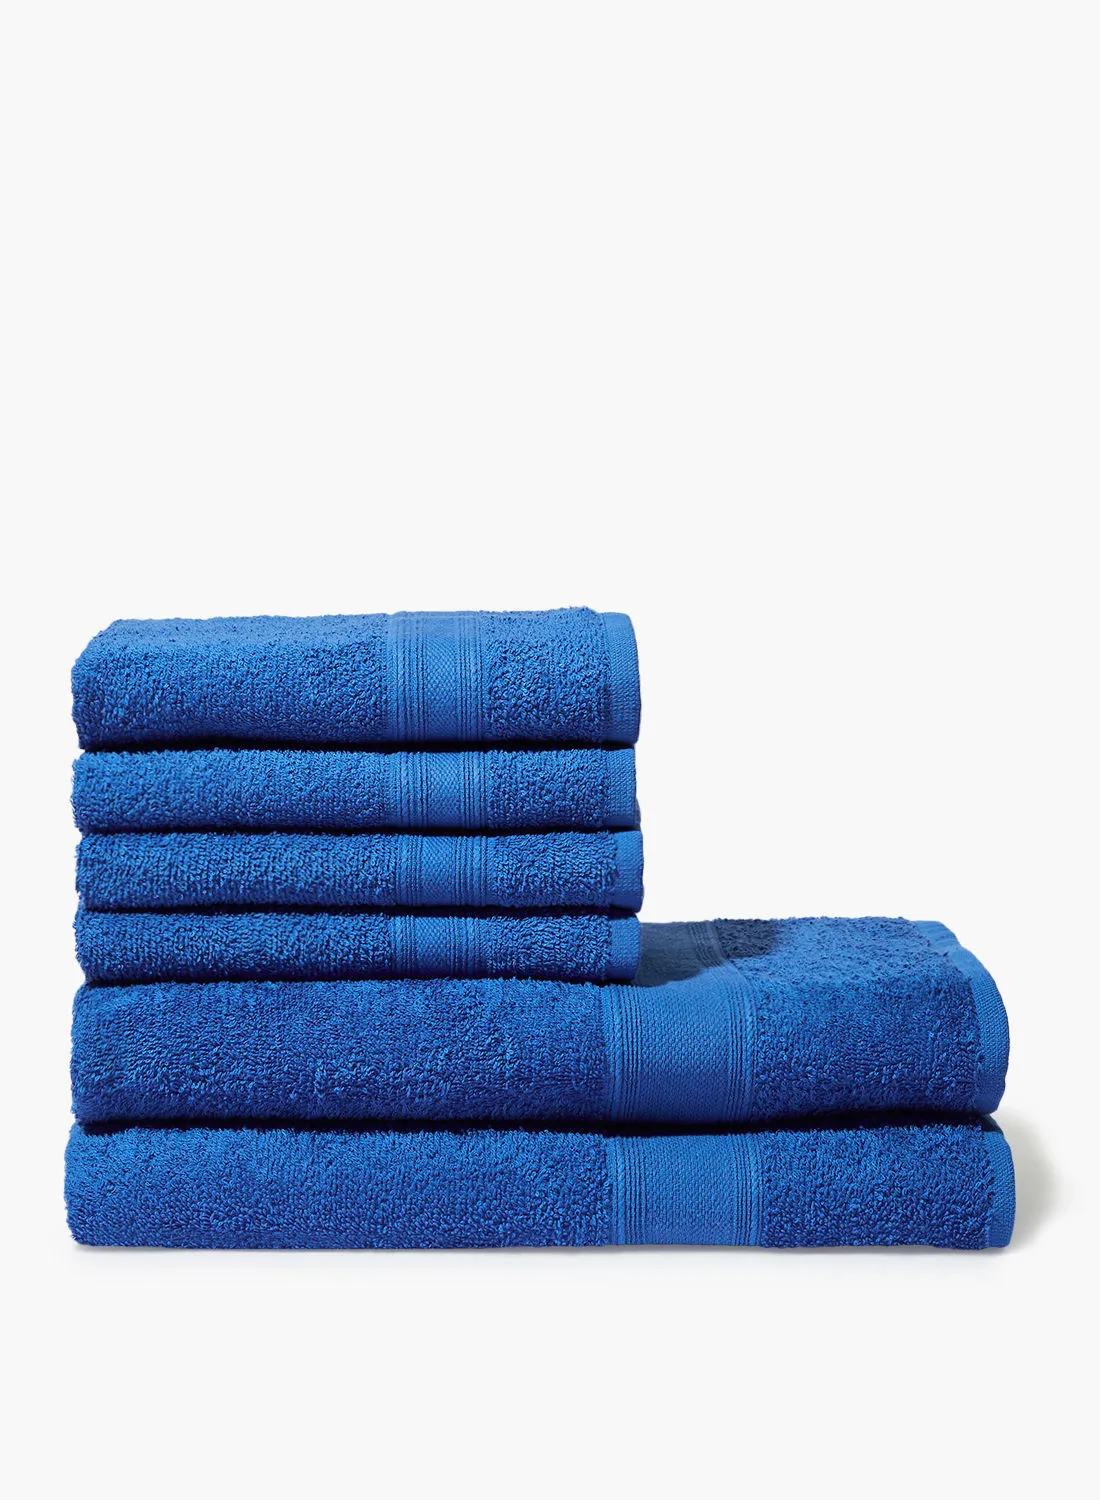 Amal 6 Piece Bathroom Towel Set - 400 GSM 100% Cotton Terry - 4 Hand Towel - 2 Bath Towel - Blue Color -Quick Dry - Super Absorbent